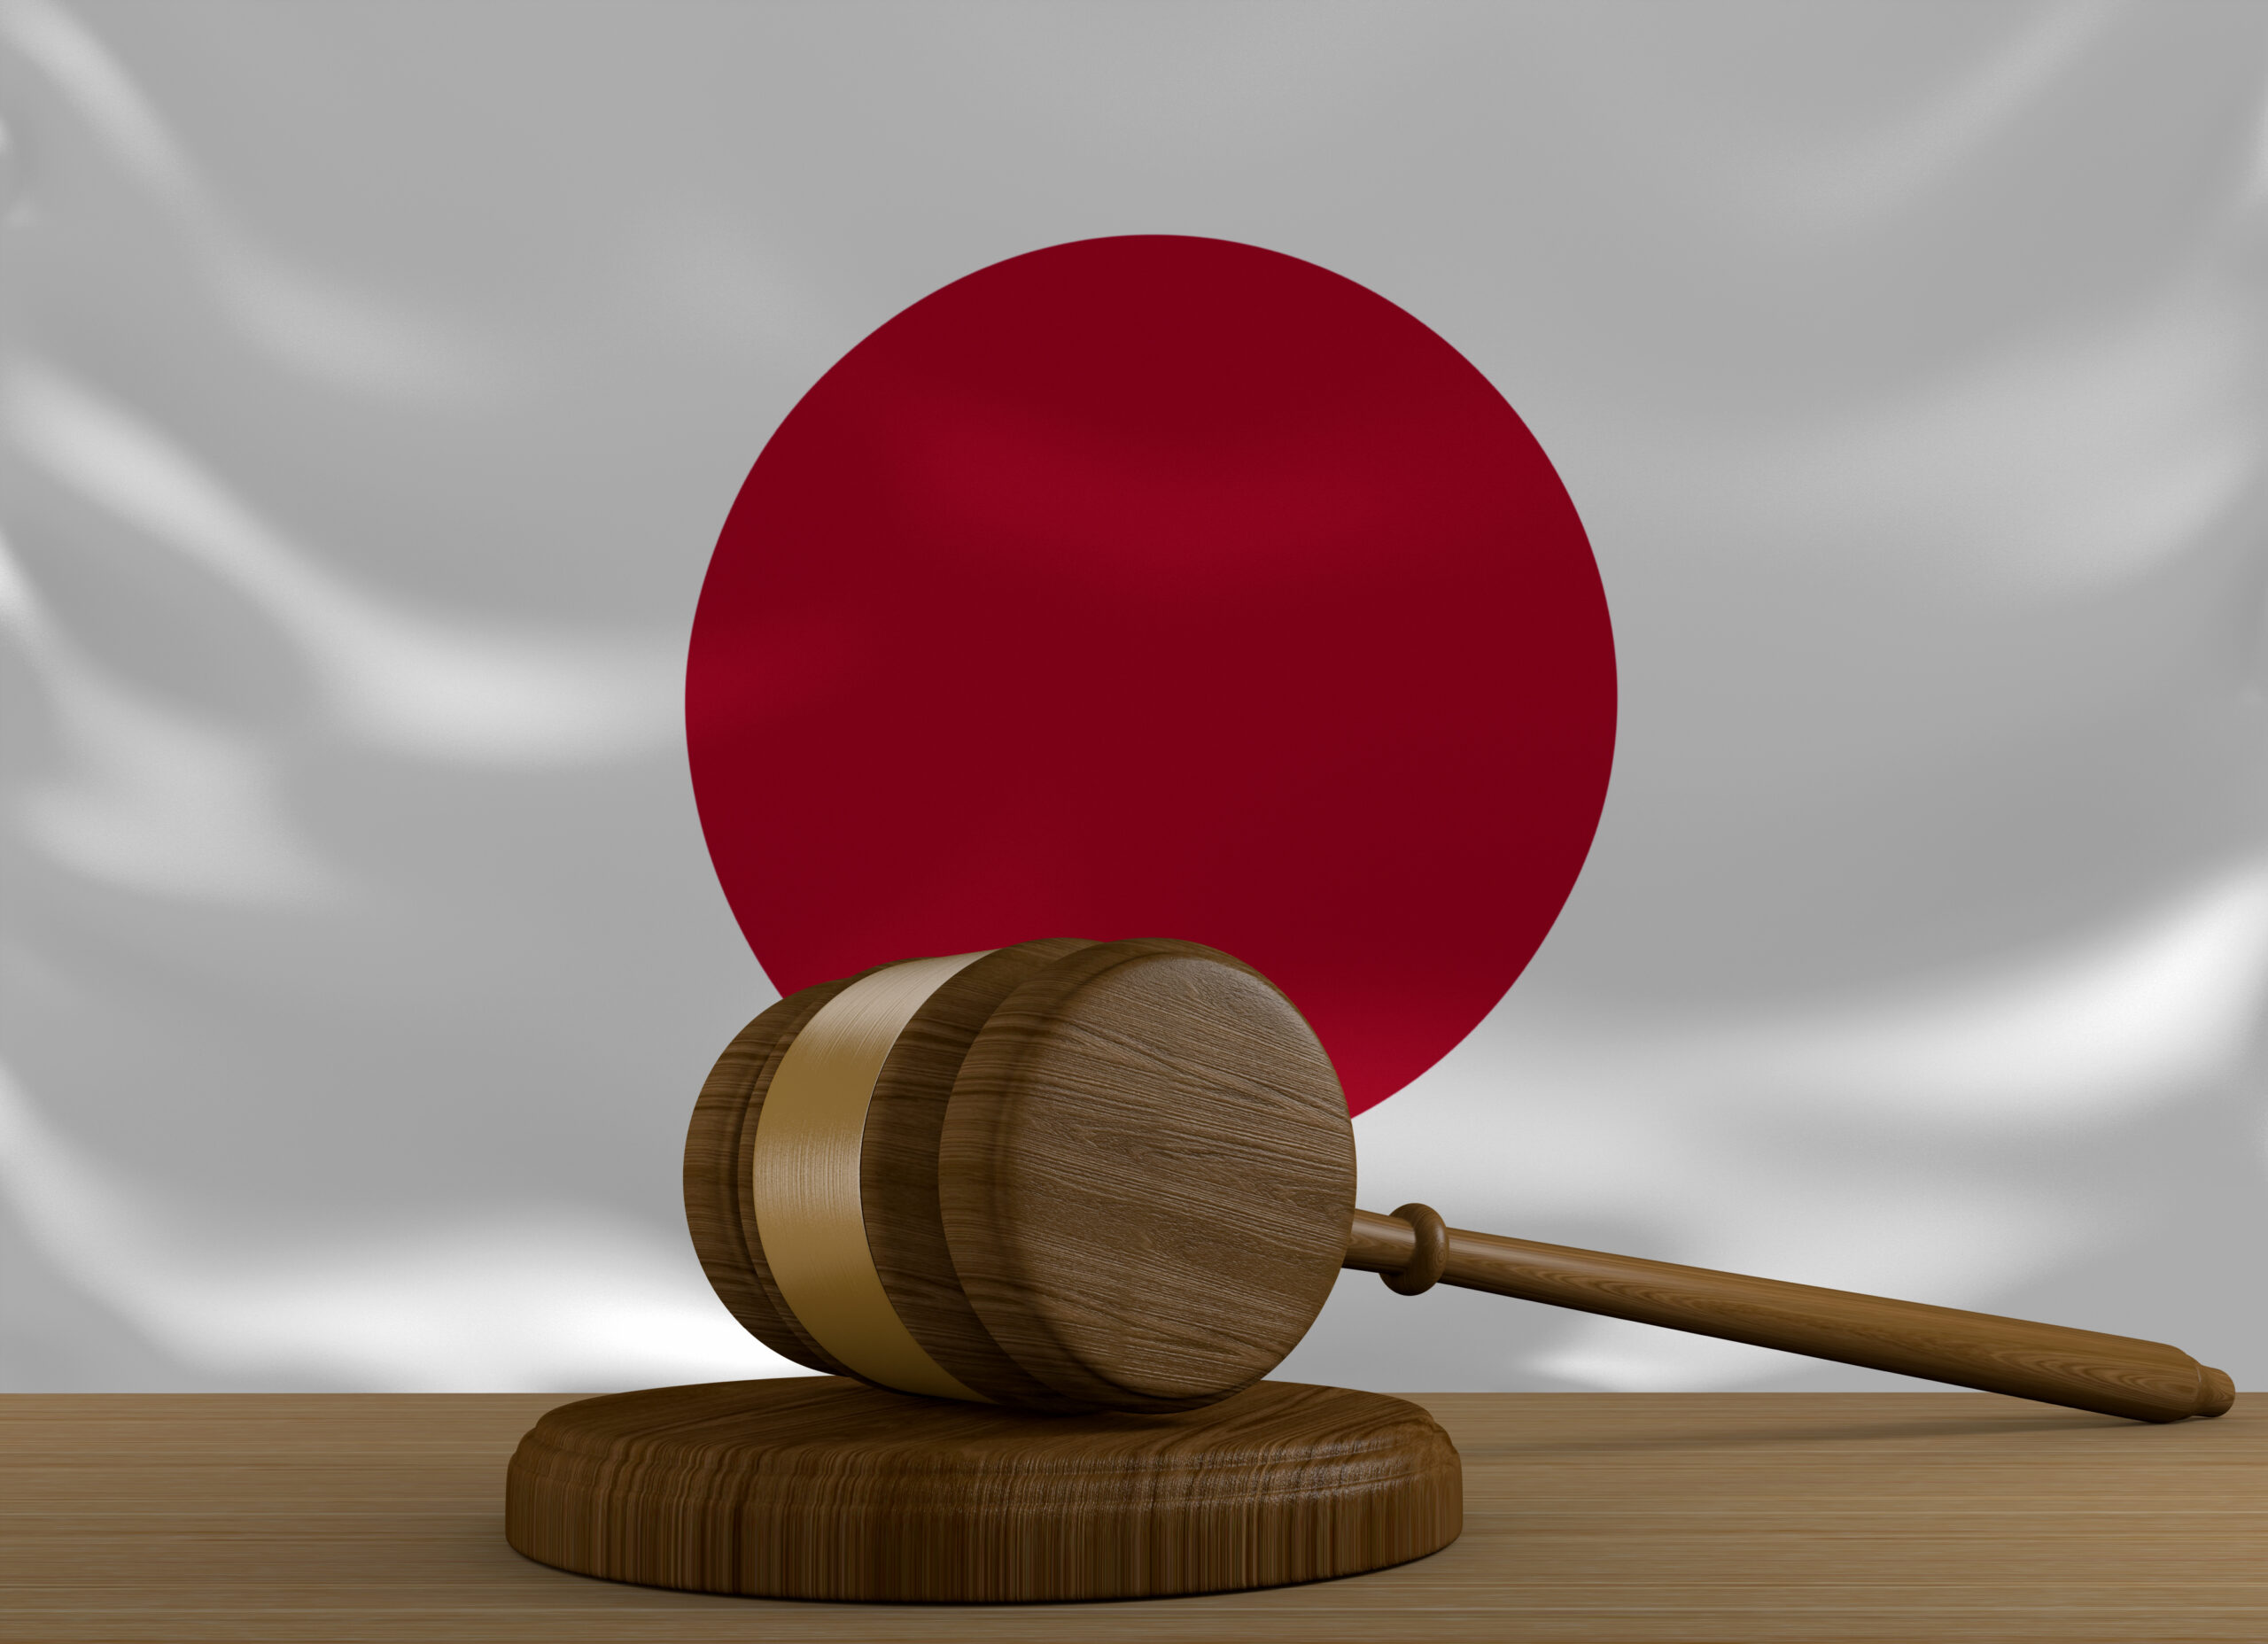 Japanese patents